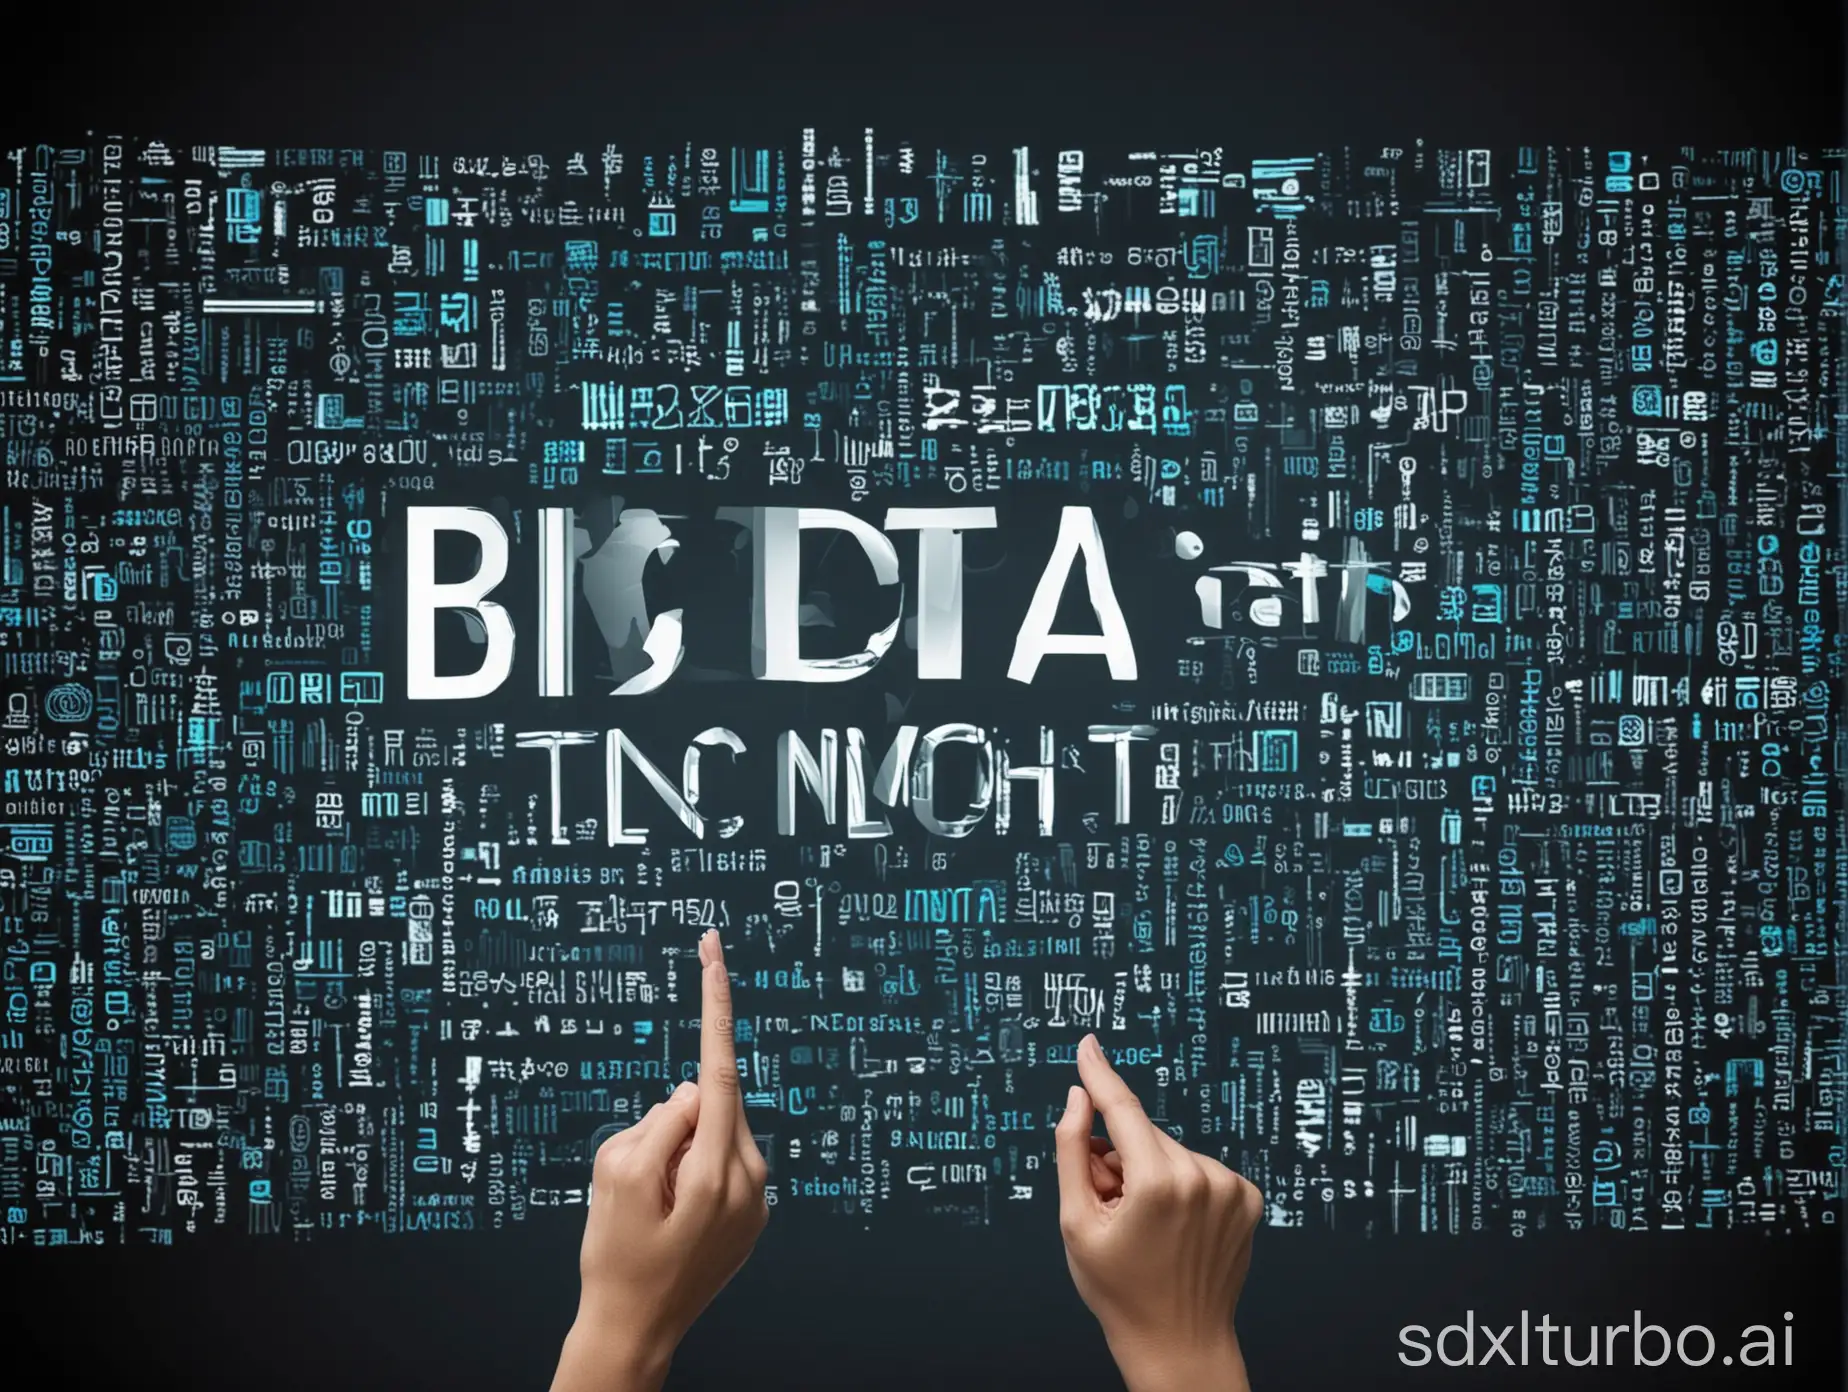 Images depicting big data technology